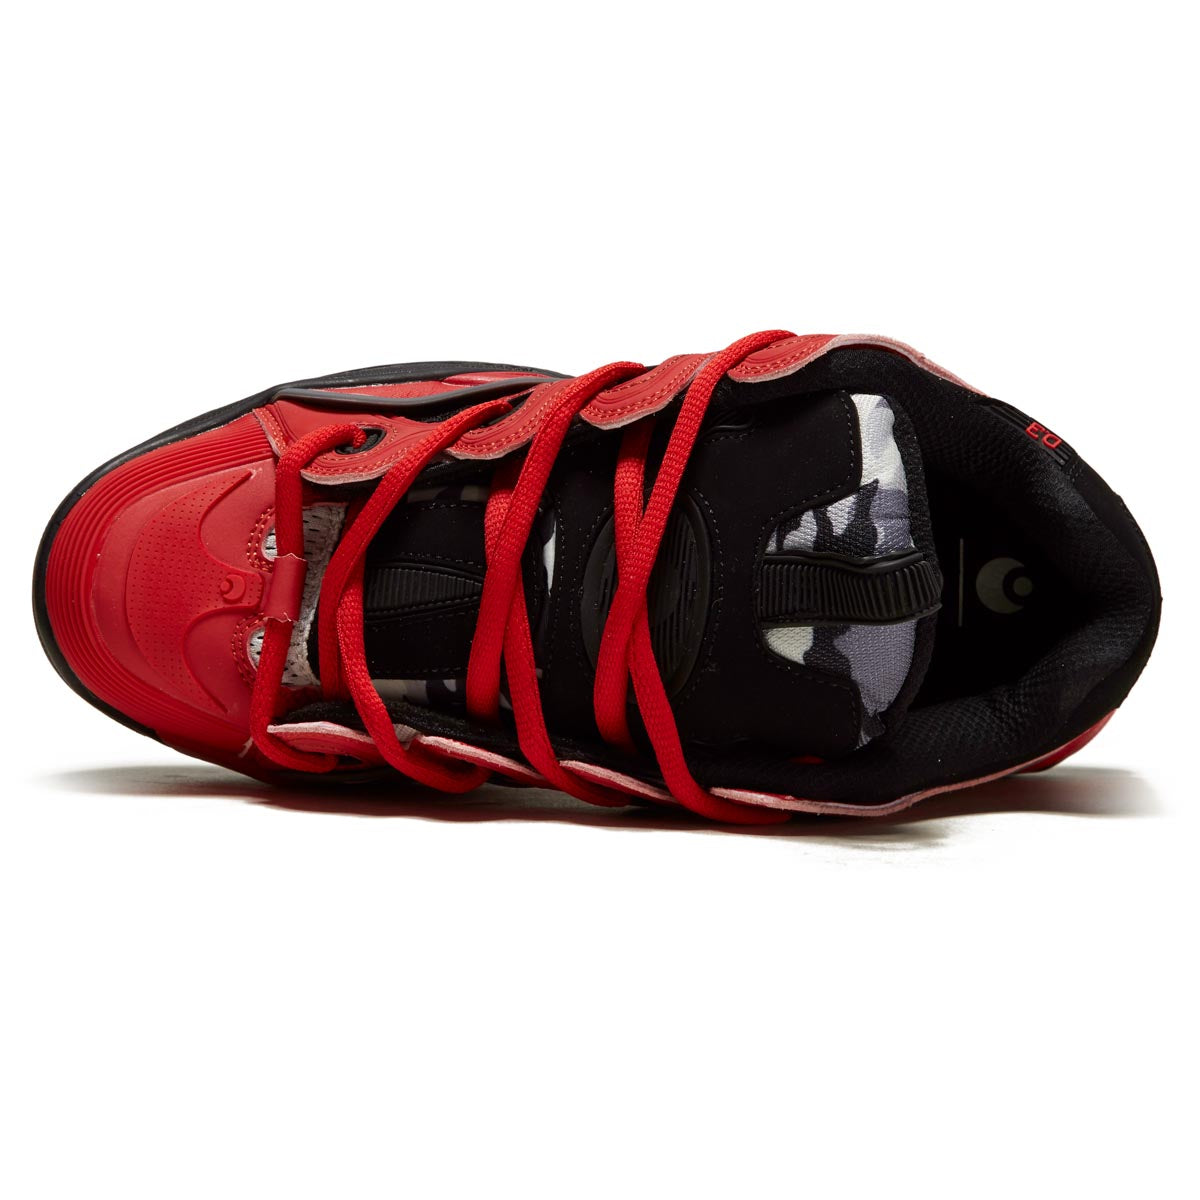 Osiris D3 2001 Shoes - Red/Black/Grey image 3